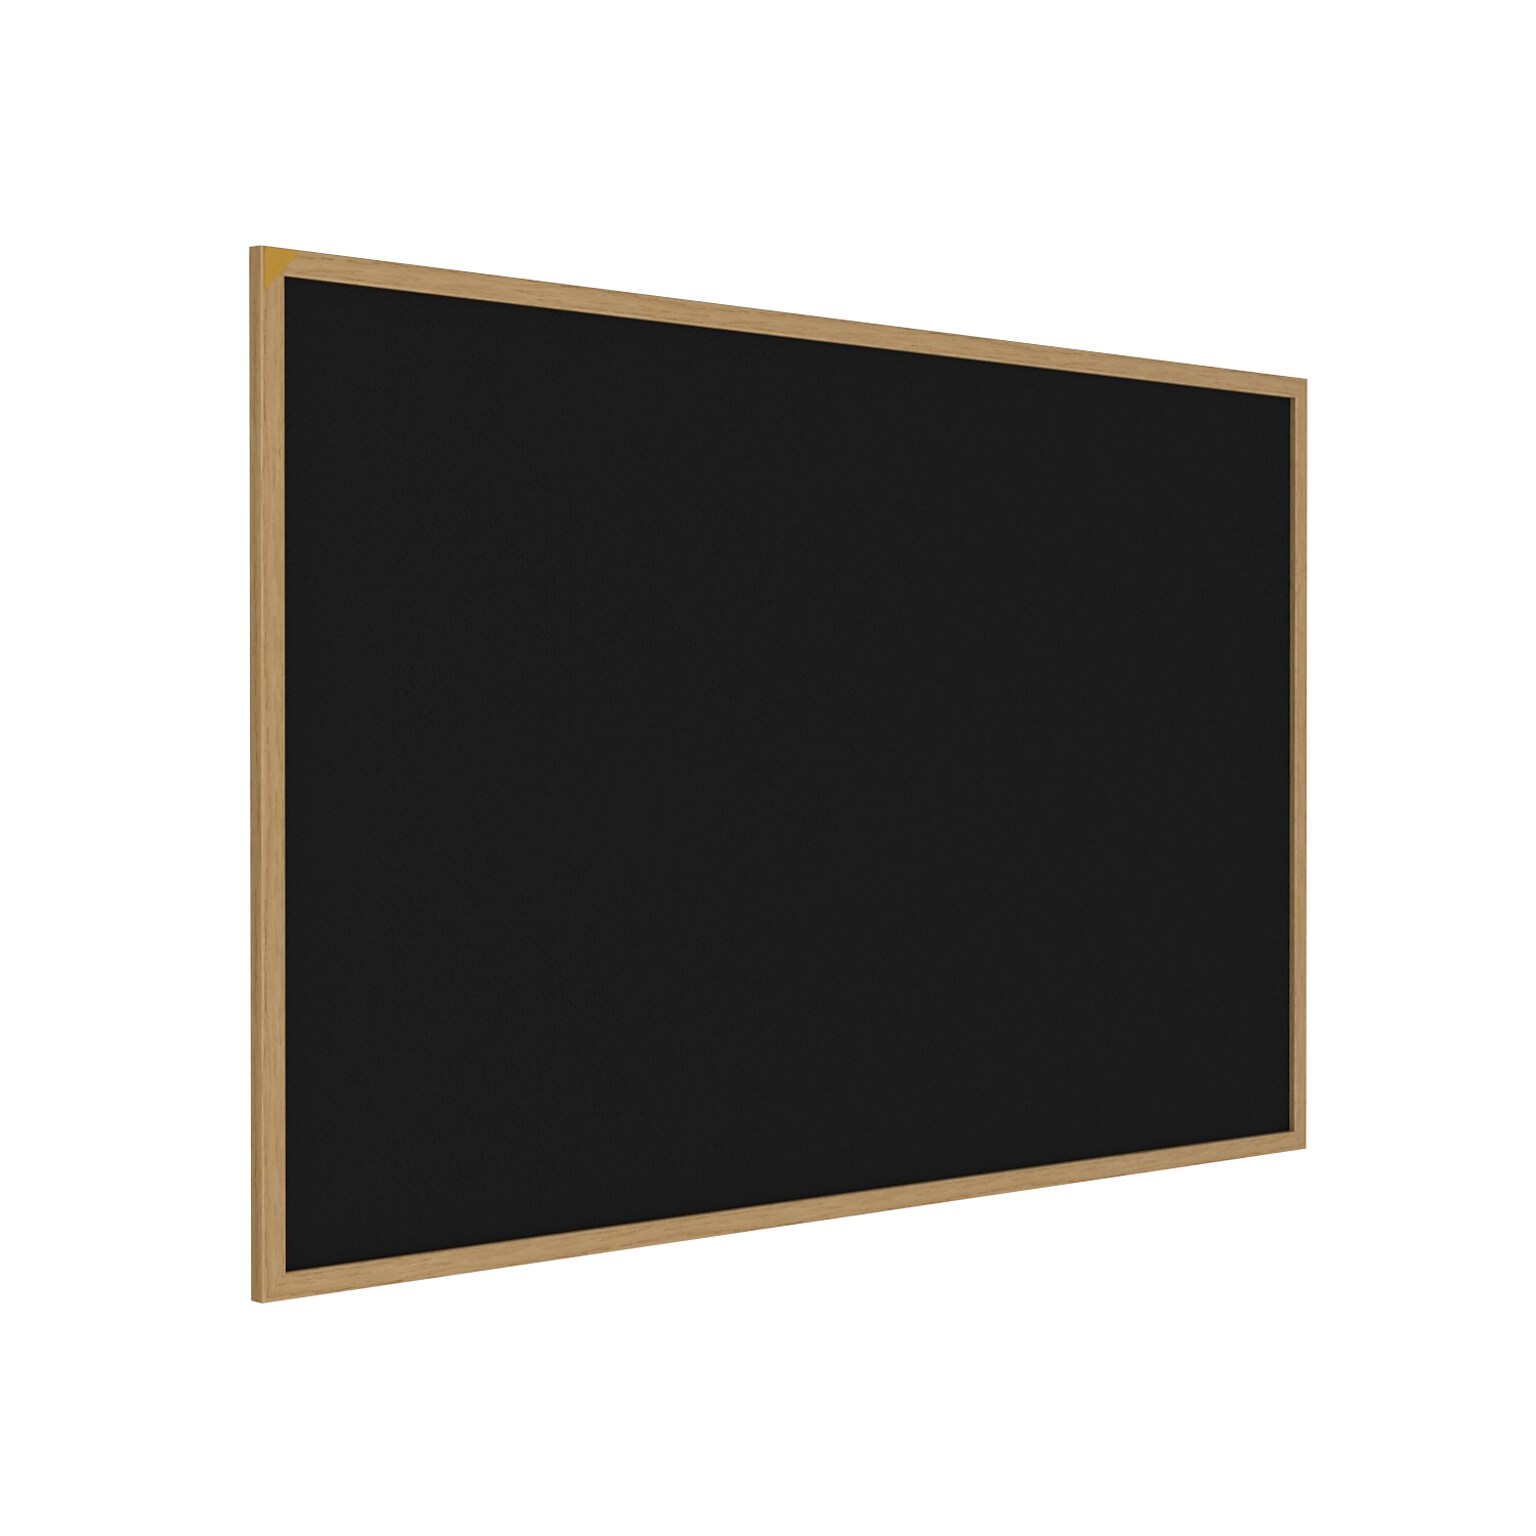 Ghent 2 H x 3 W Recycled Bulletin Board with Oak Finish Frame, Black (WTR23-BK)